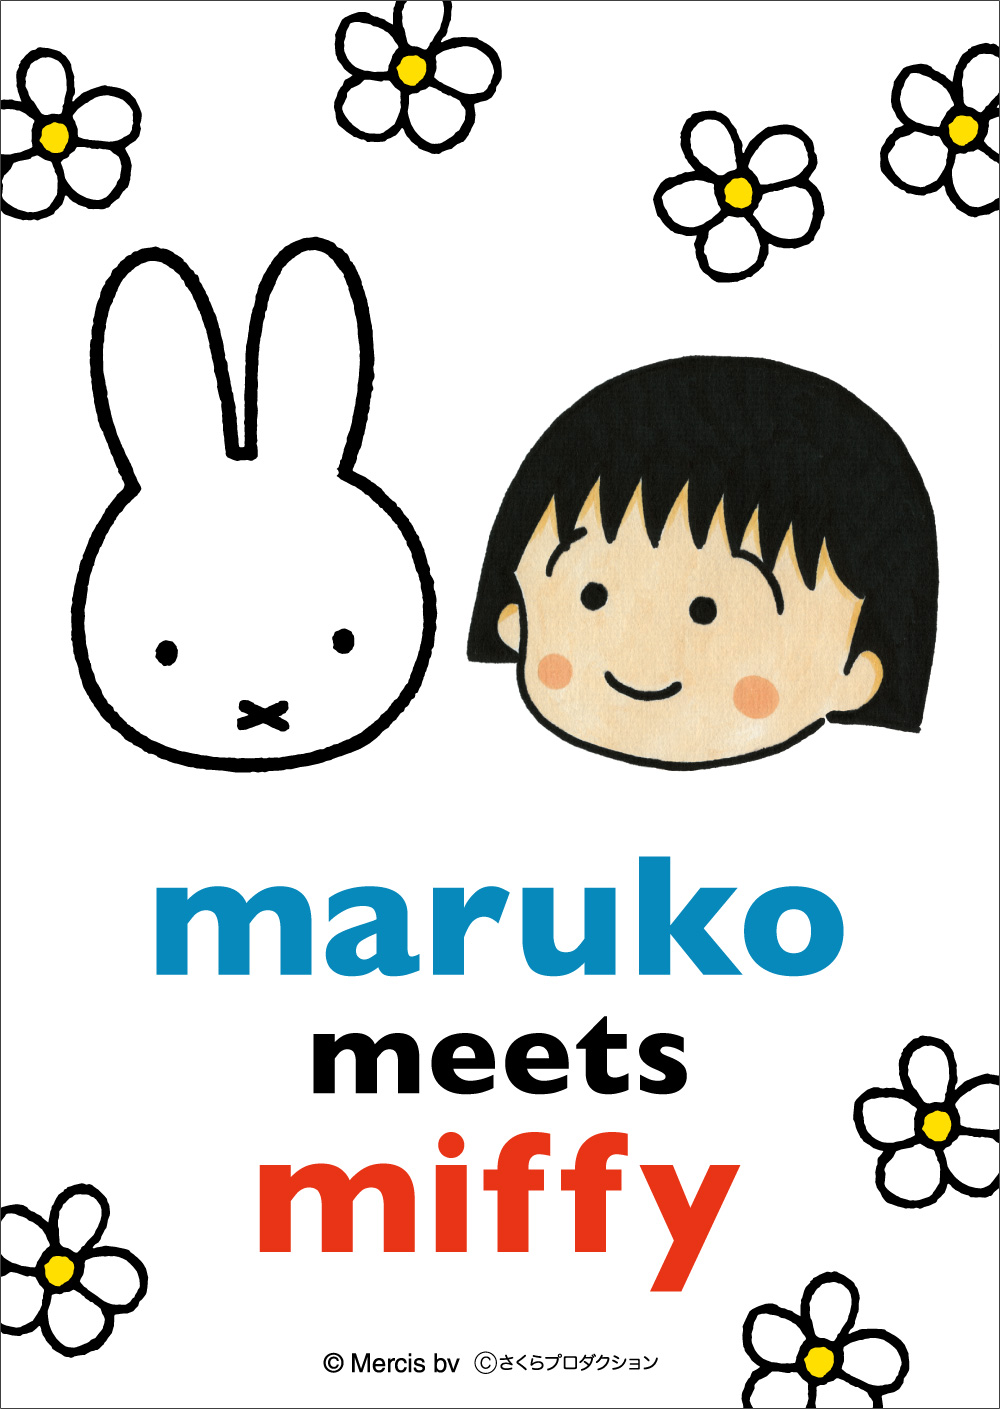 miffy style、キデイランドで 「maruko meets miffy」フェア開催｜トピックス｜dickbruna.jp 日本の